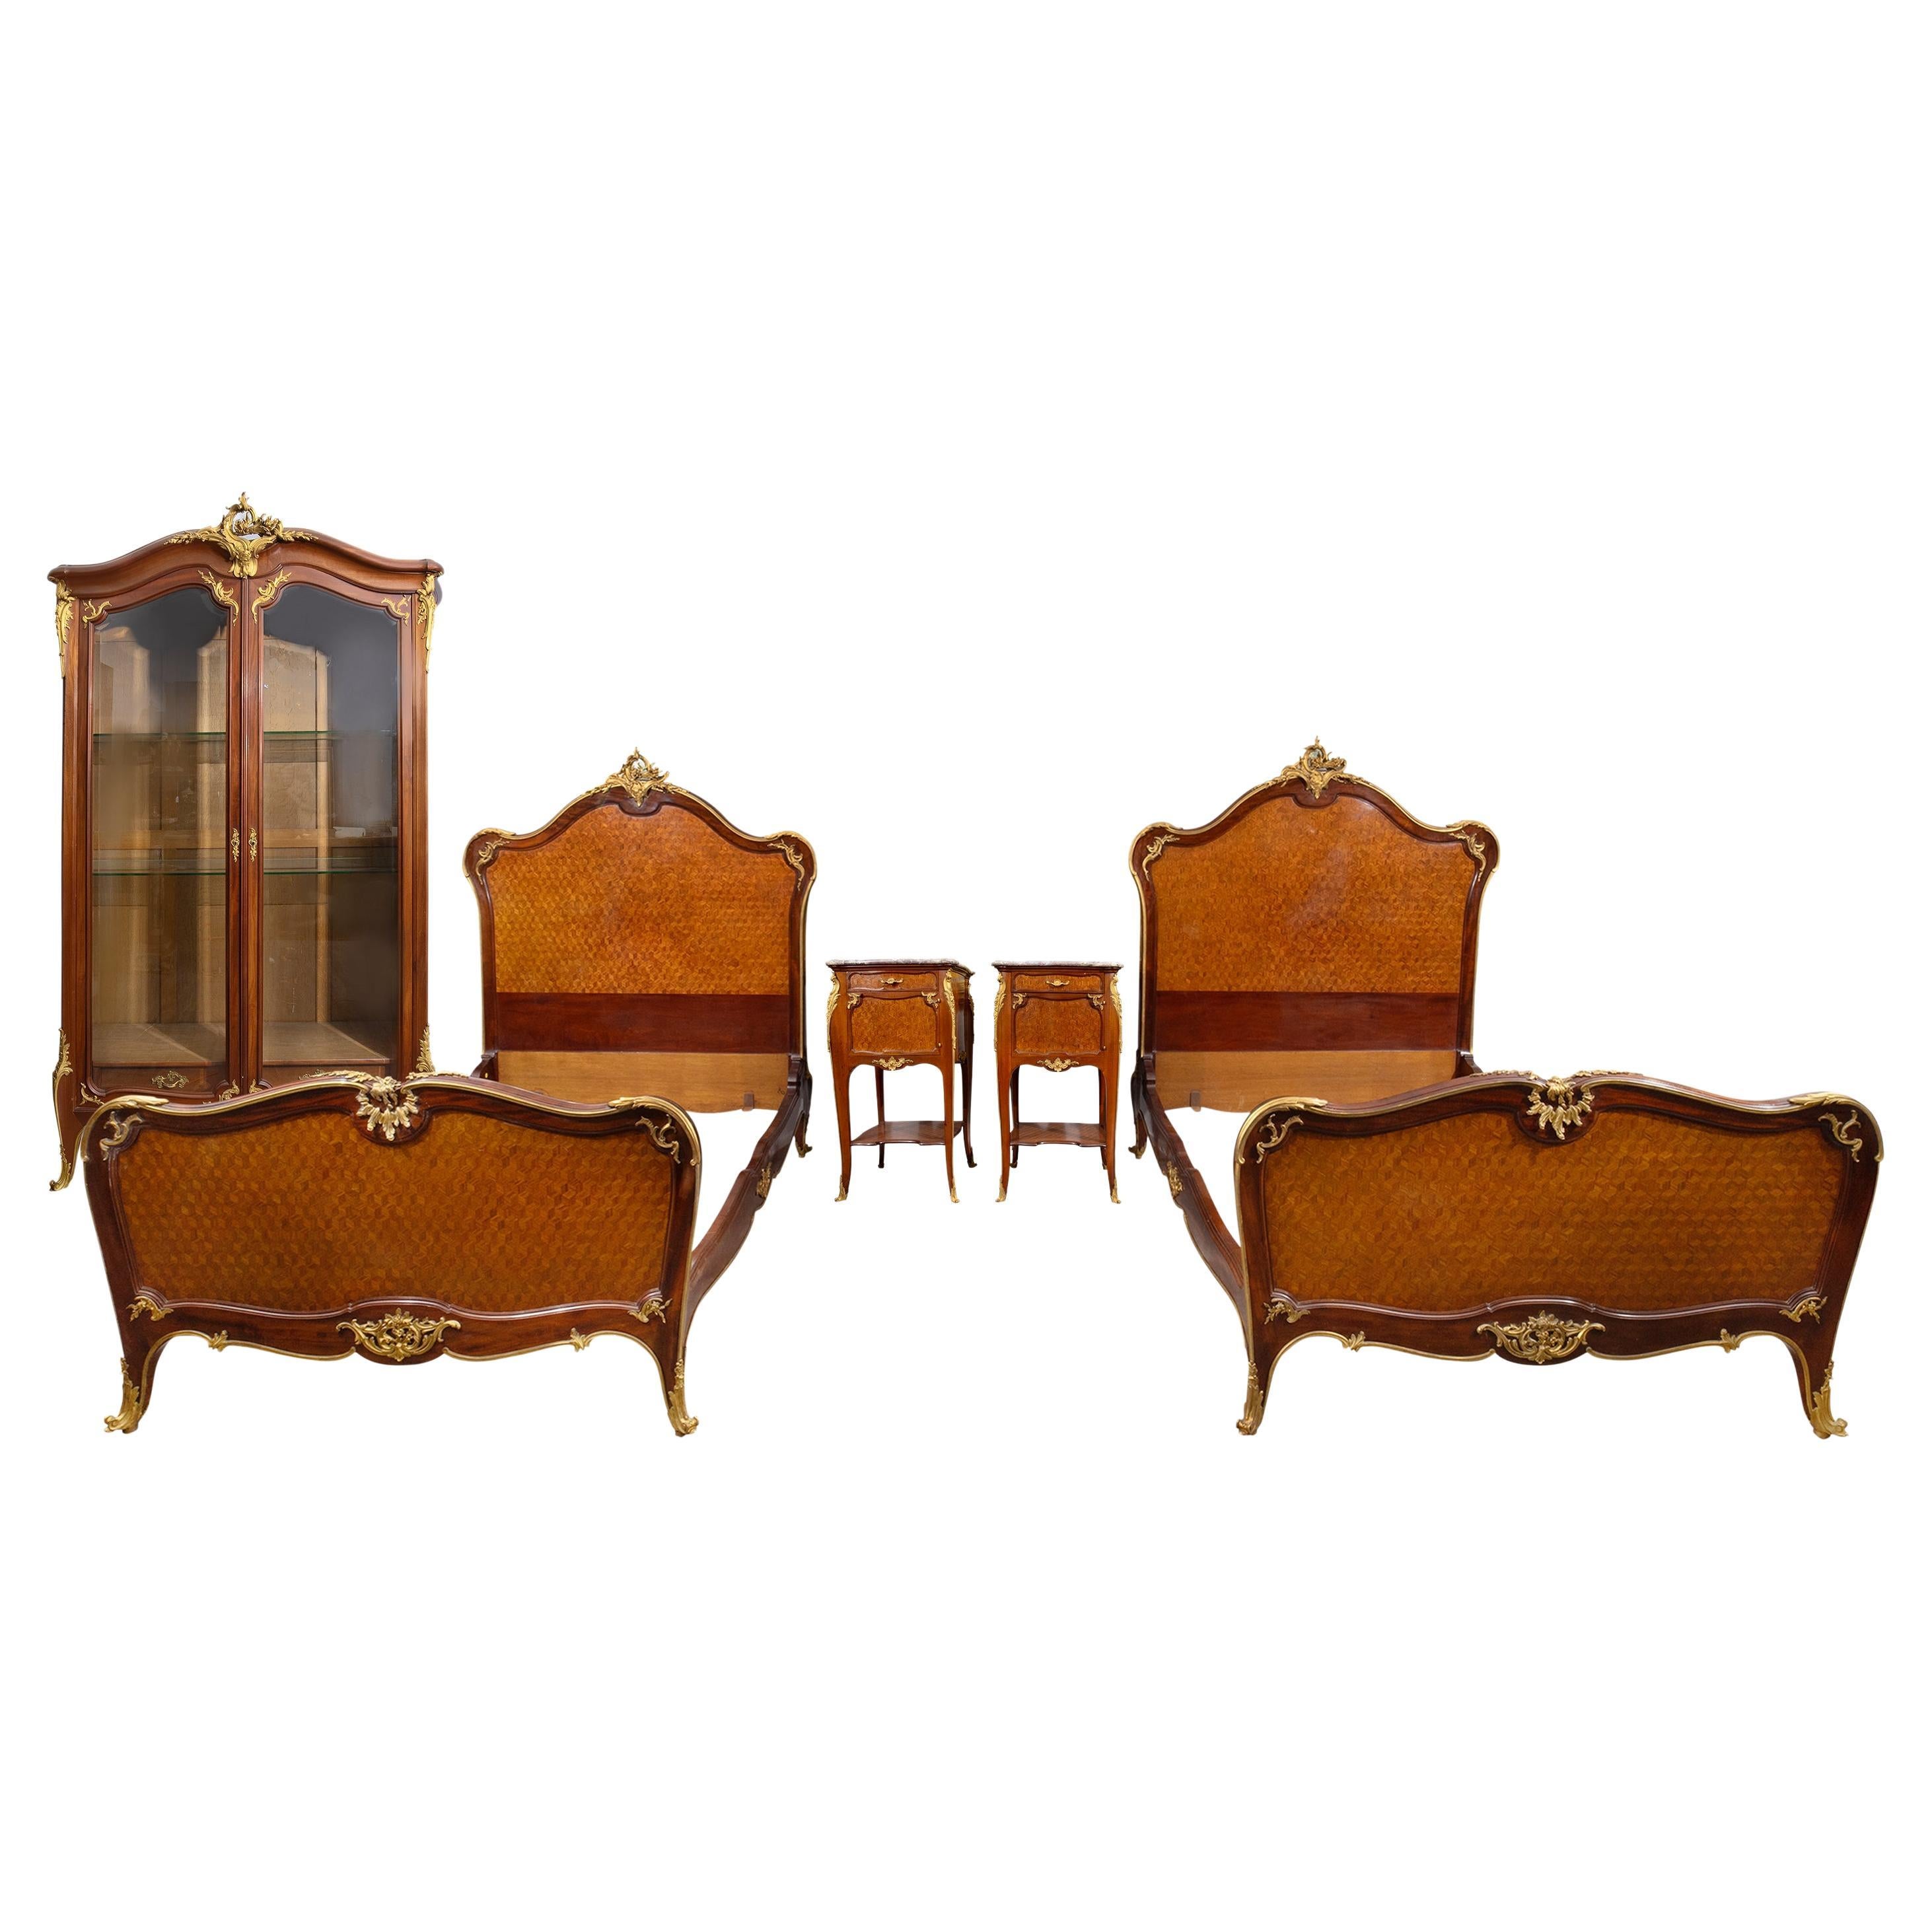 A Rare Francois Linke Louis XV Style Five-Piece Bedroom Set, Circa 1905 For Sale